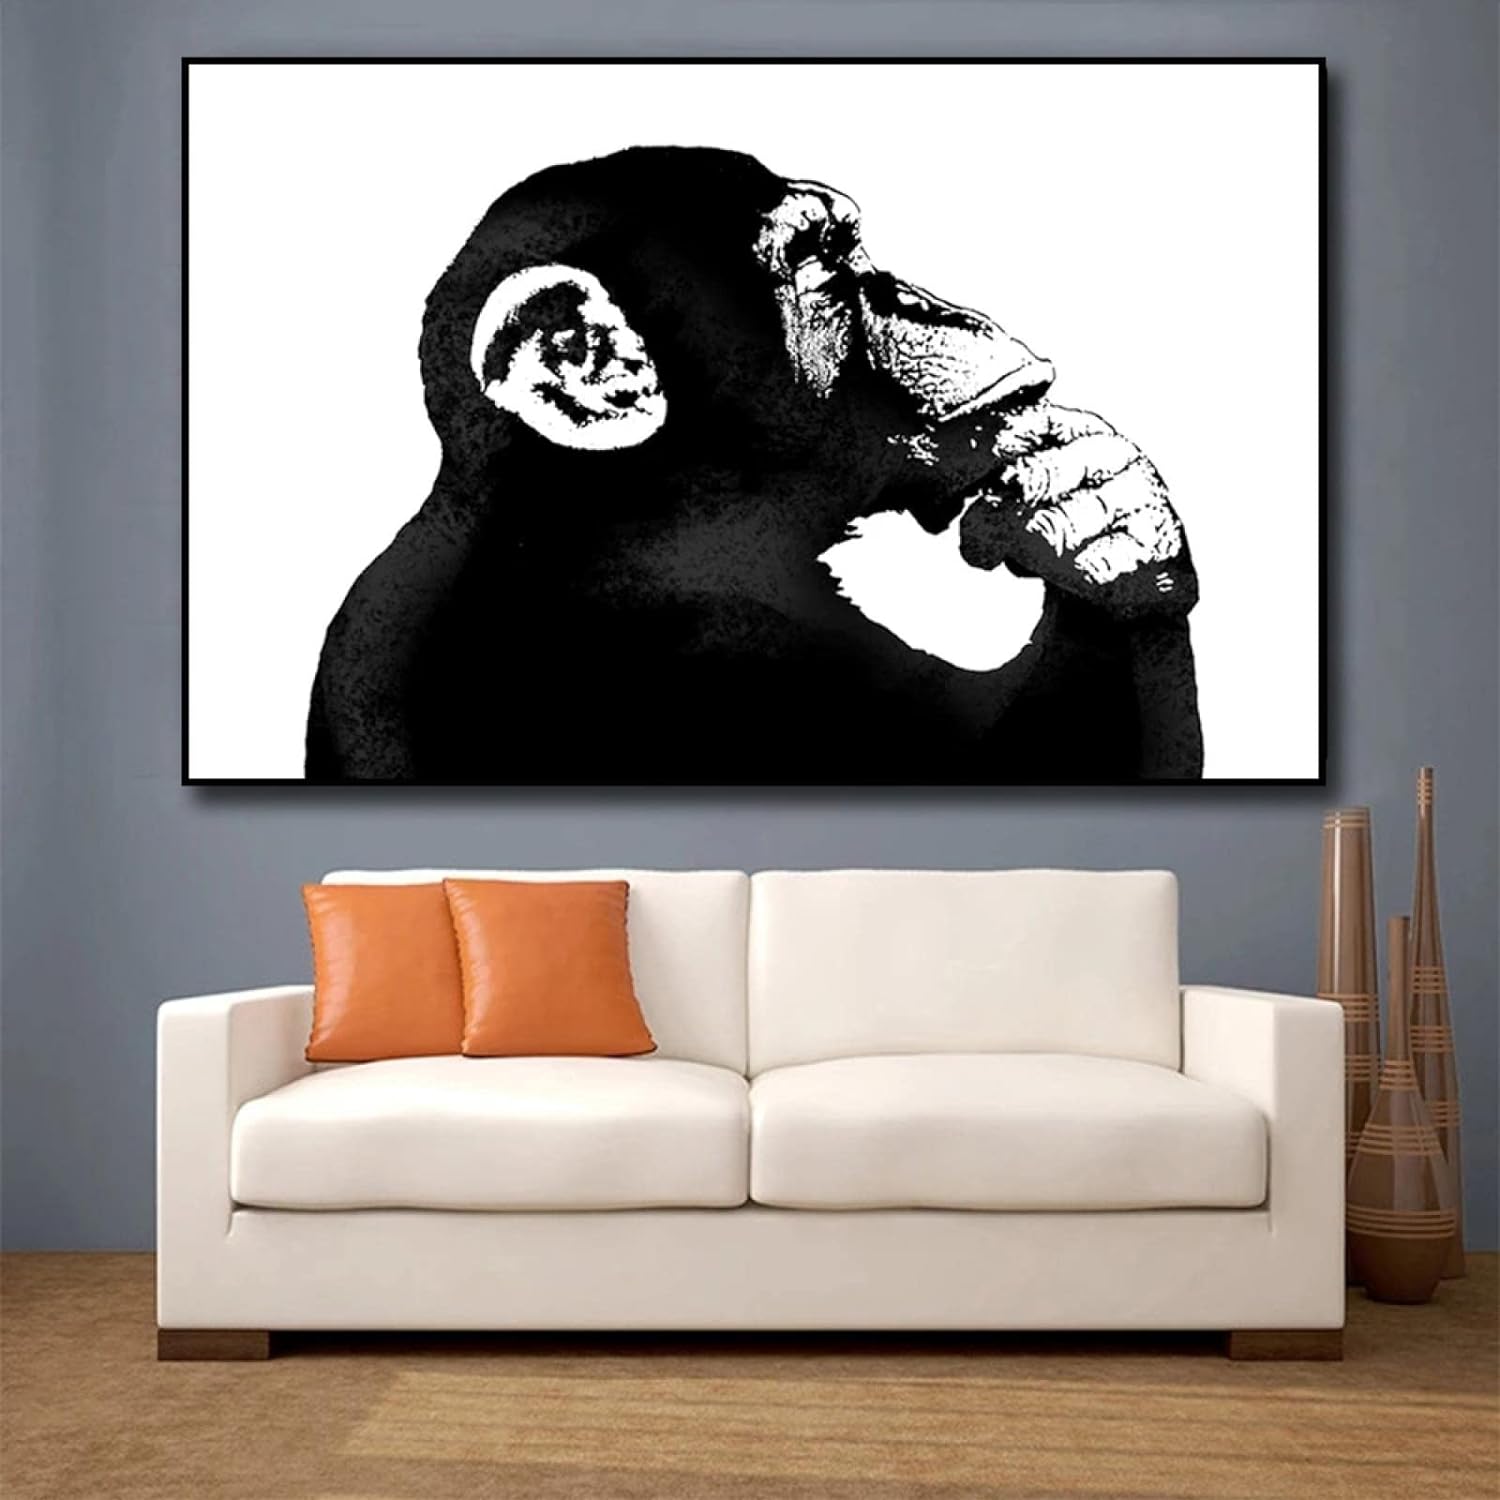 Thought-Provoking: Banksy Monkey Thinker